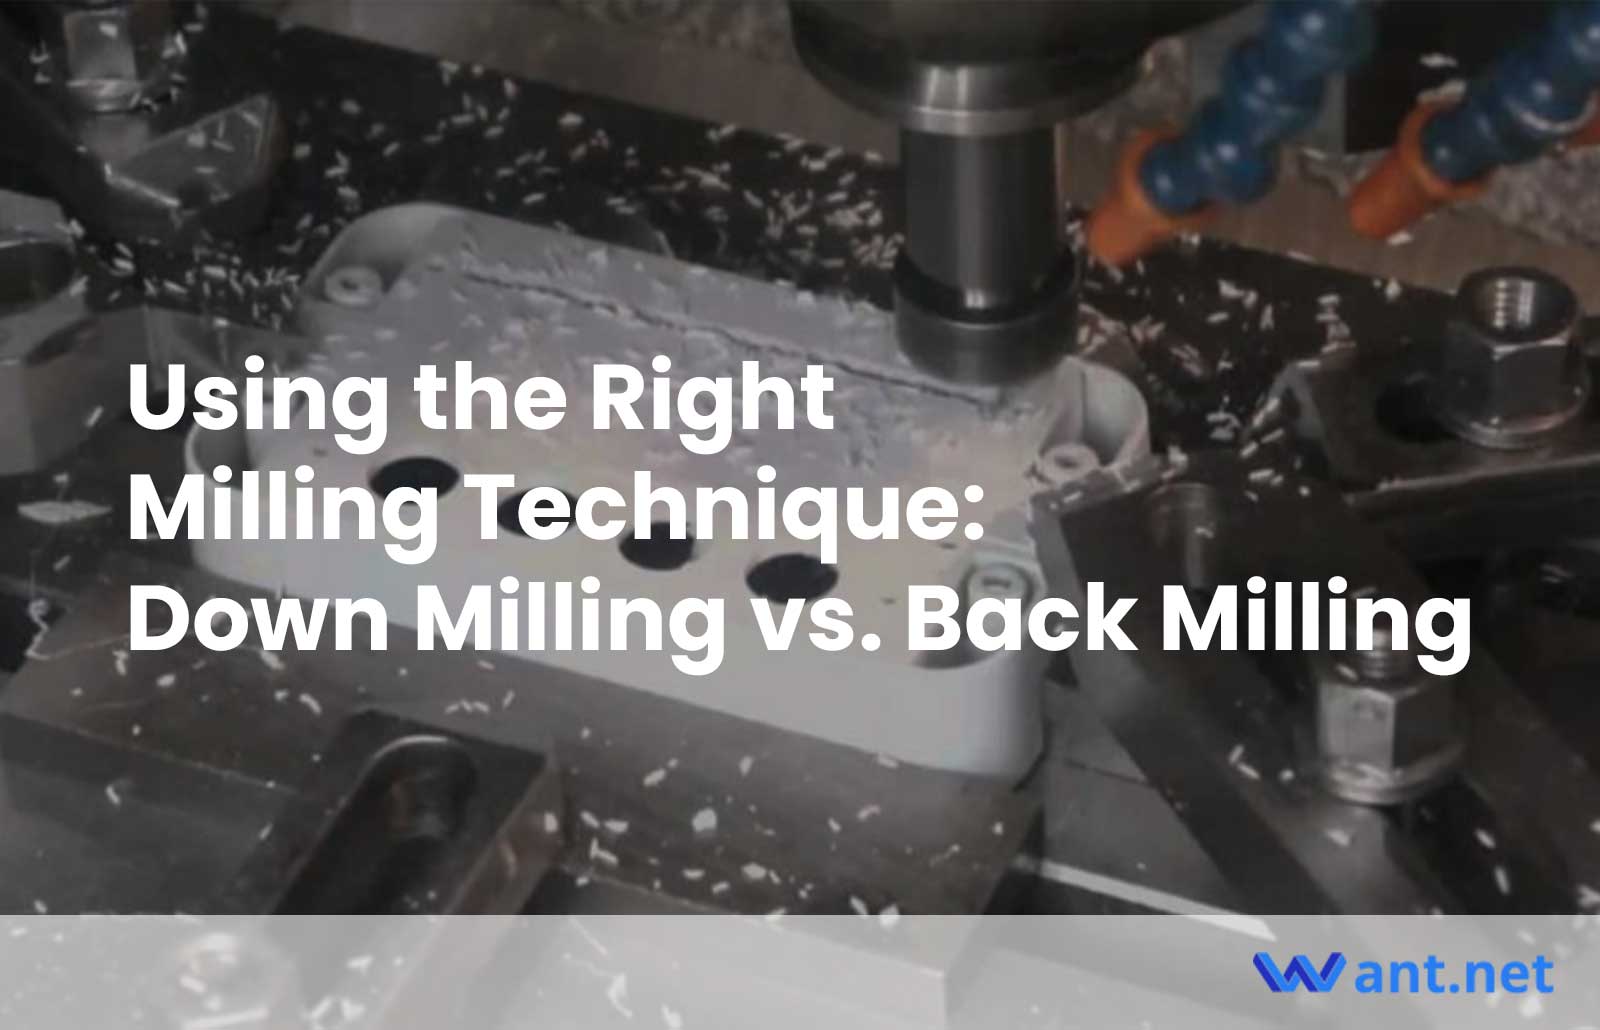 Down Milling vs. Back Milling